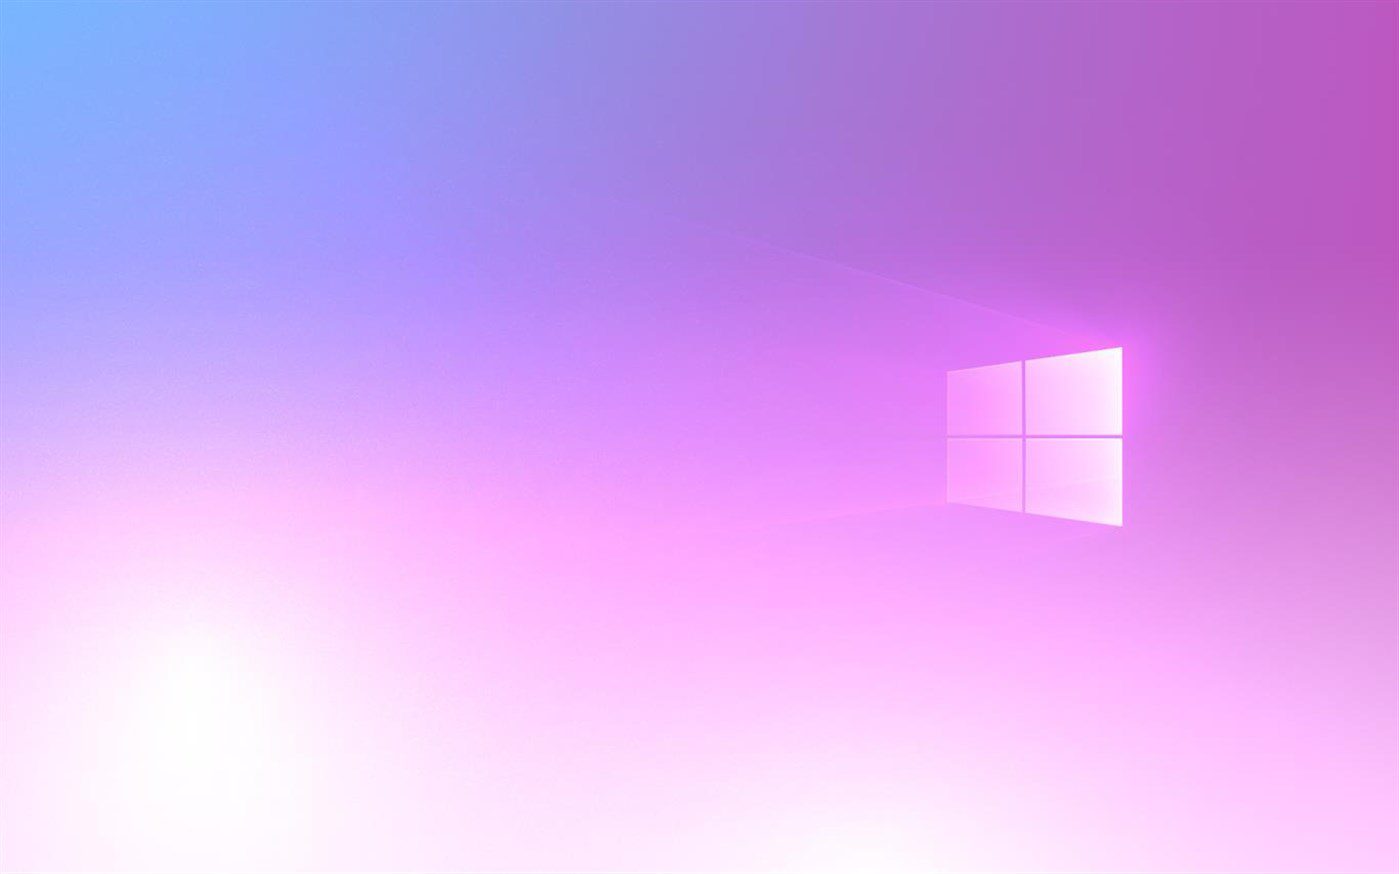 Microsoft celebrates Pride Month with new free Premium Windows 10 Theme